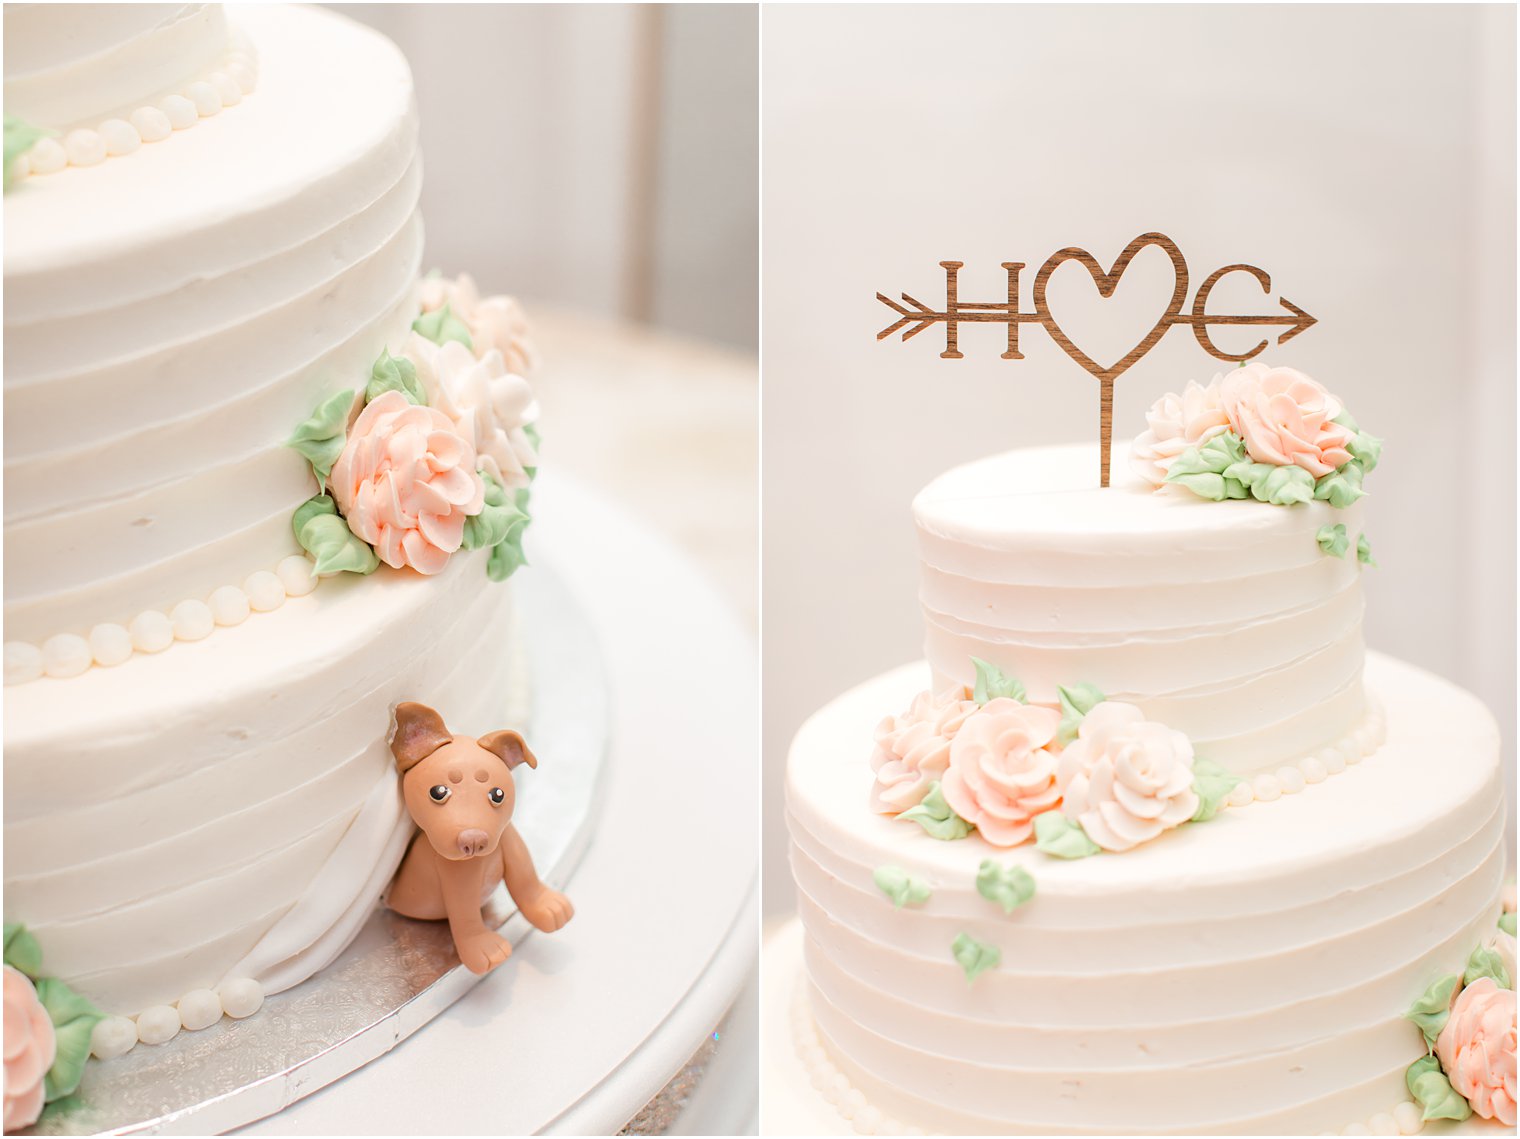 Wedding cake by Chocolate Carousel